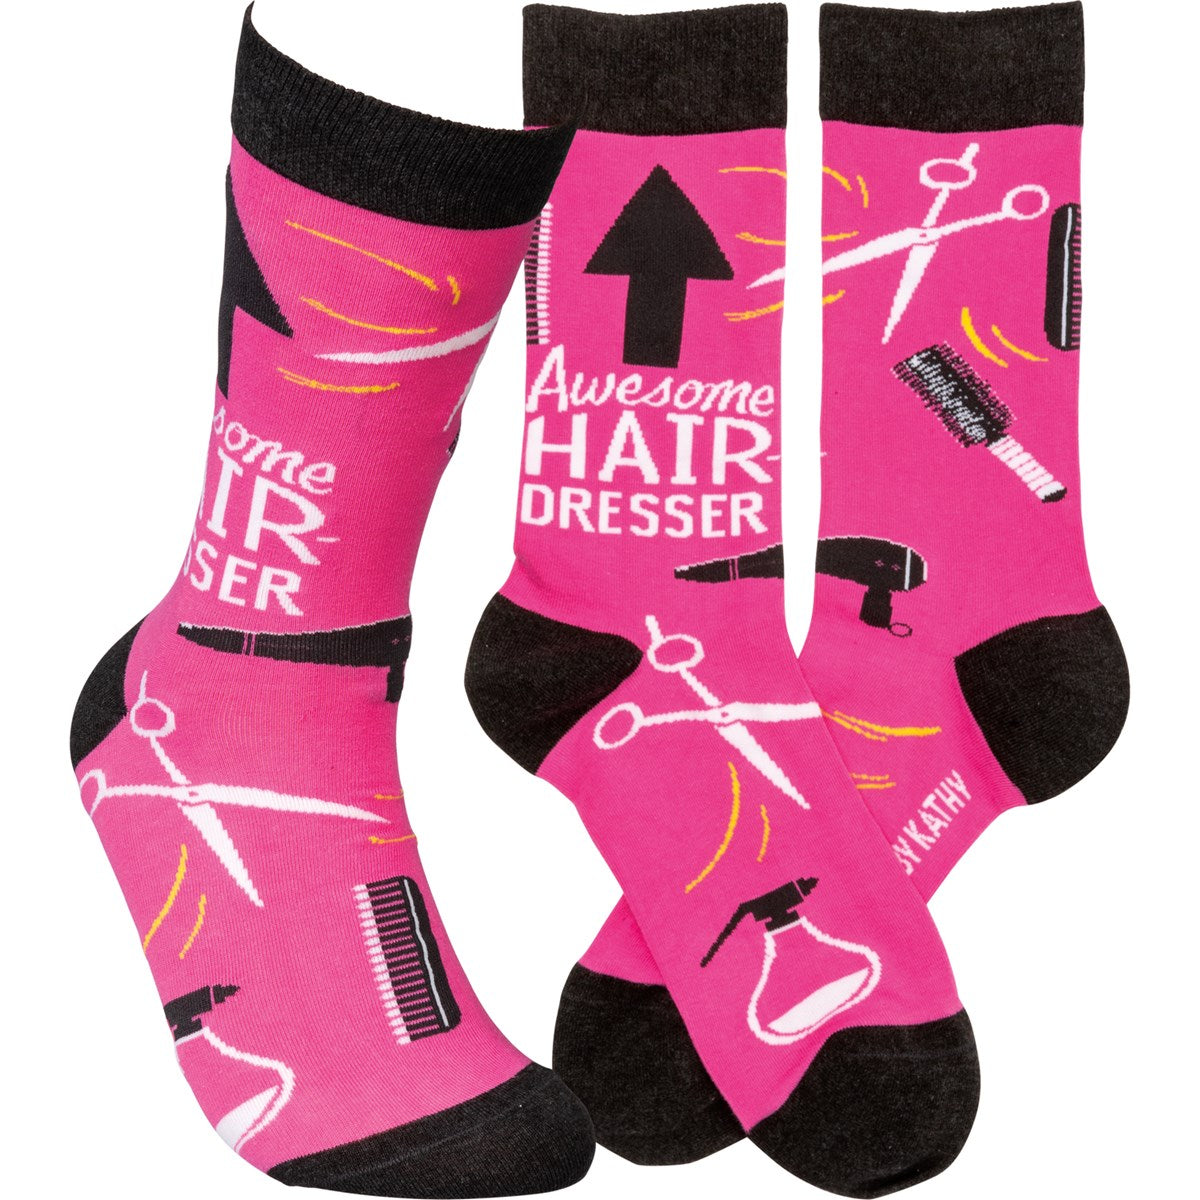 Socks | Awesome Hairdresser